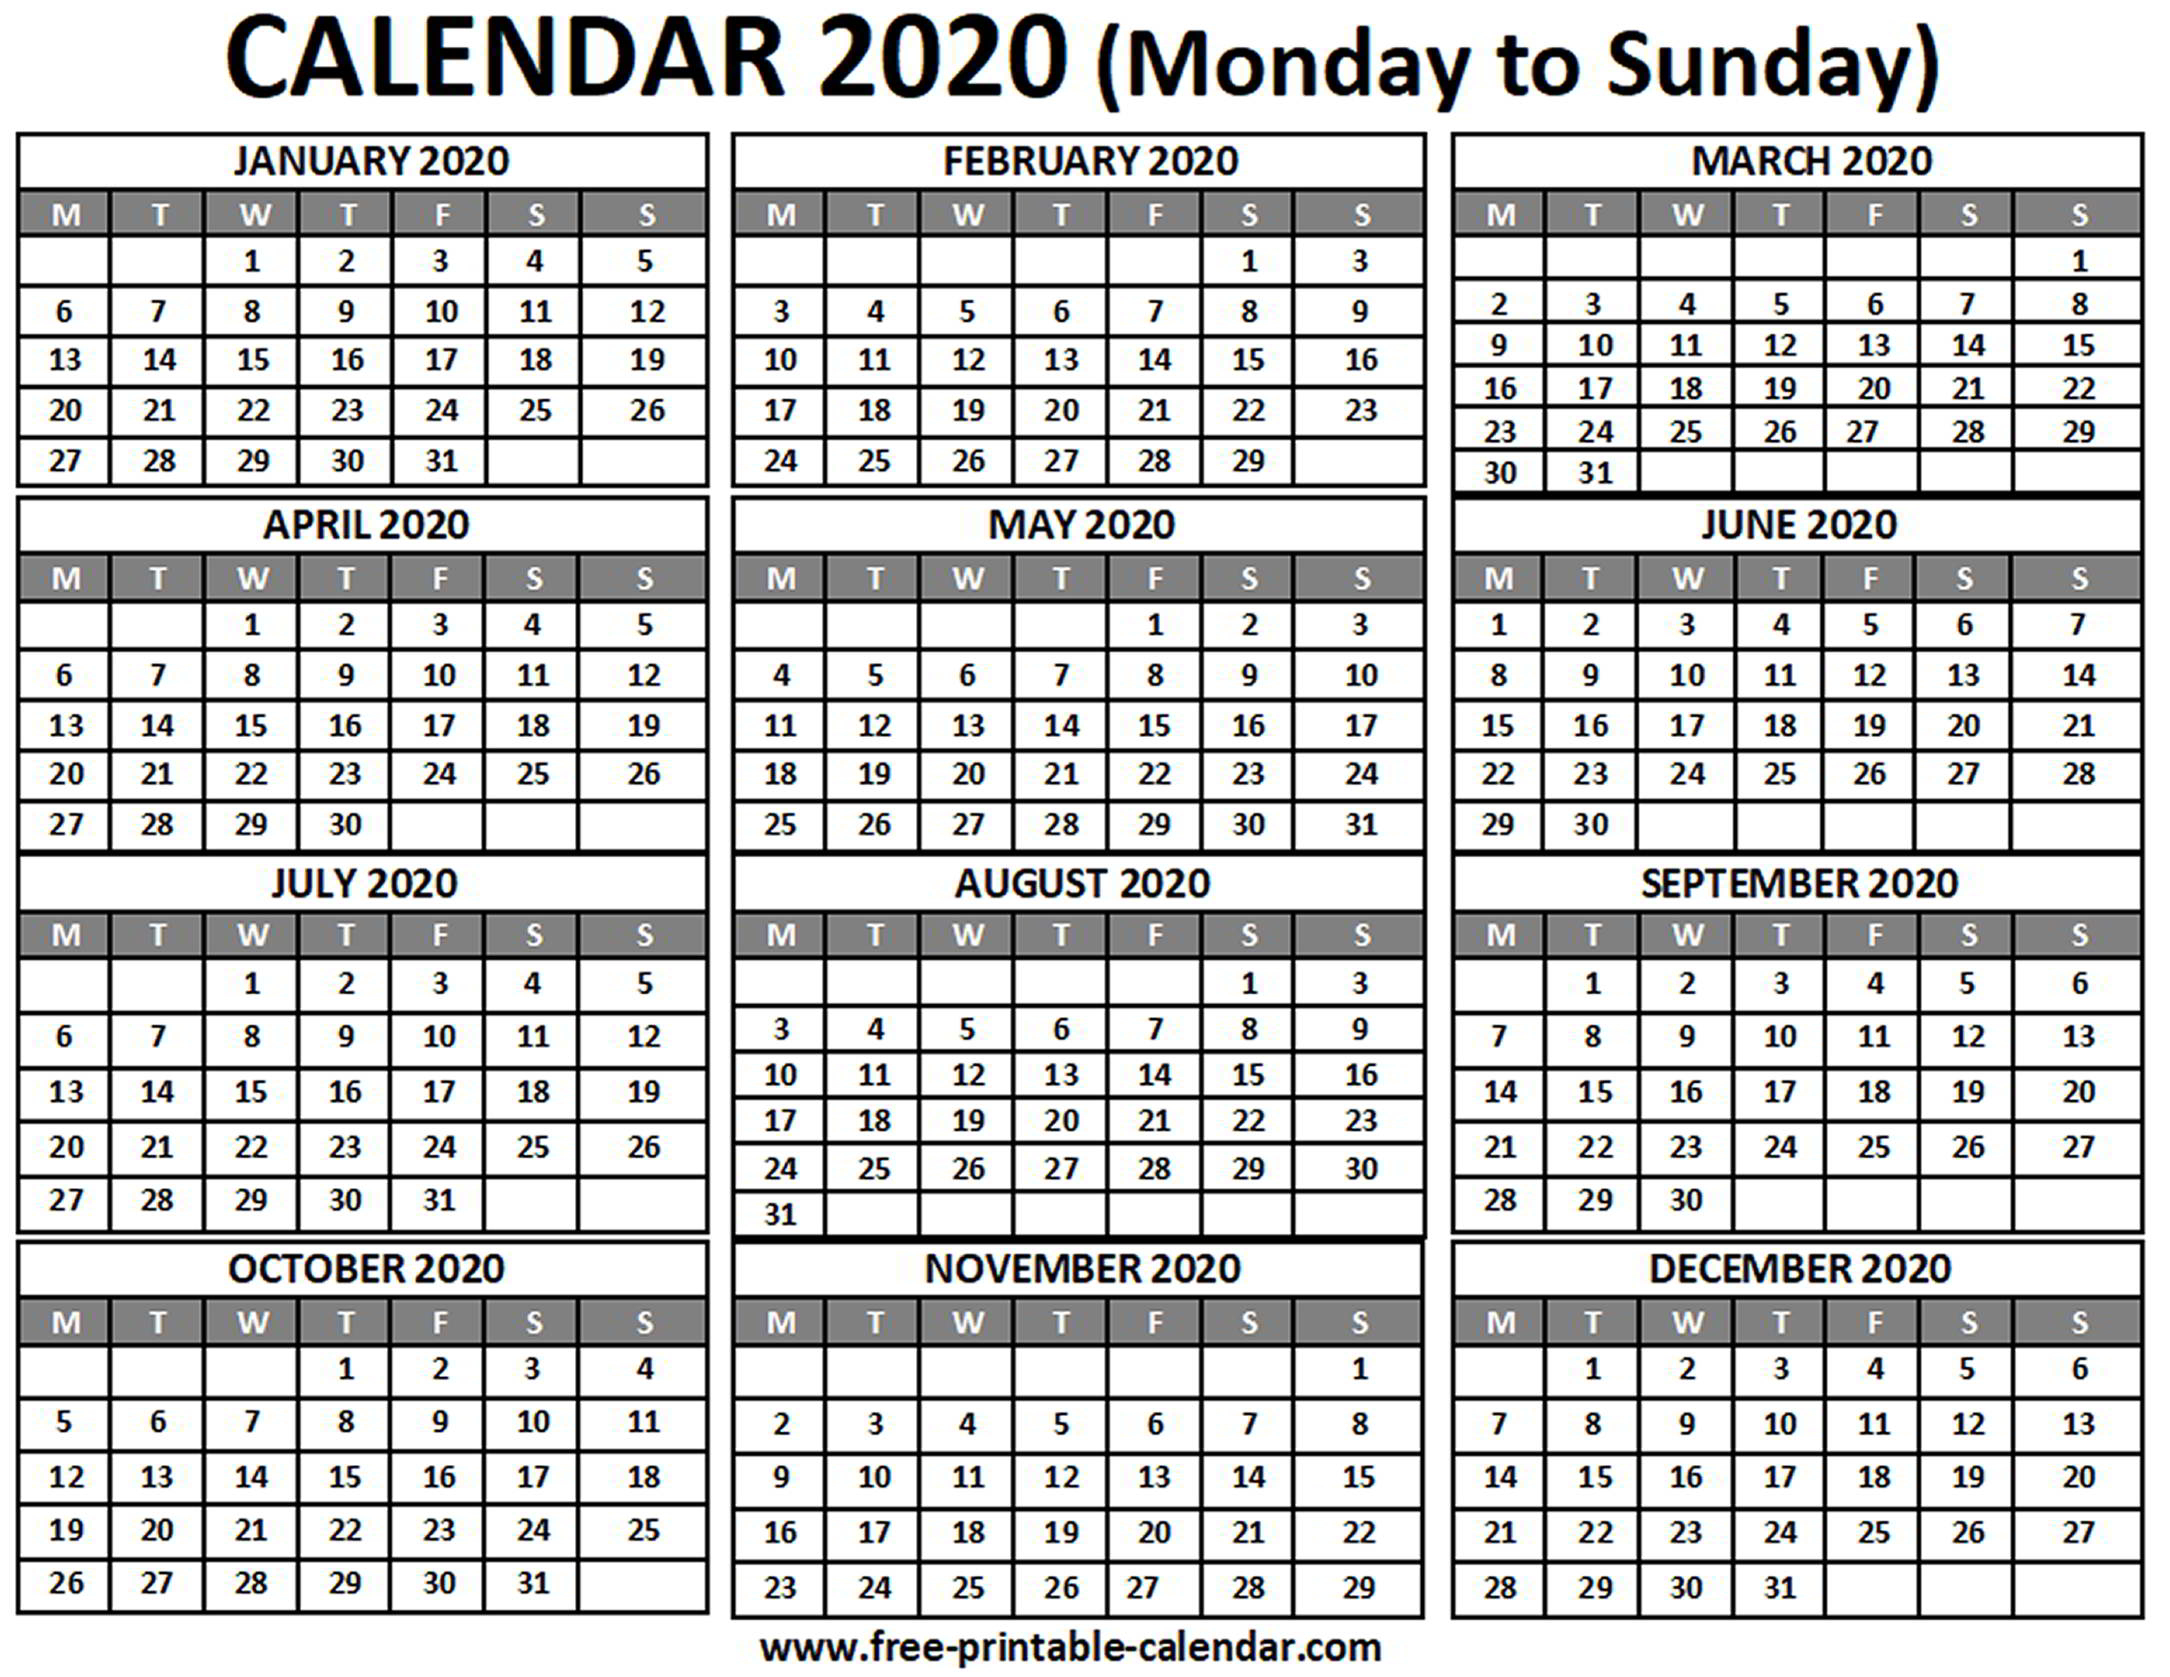 2020 Calendar - Free-Printable-Calendar